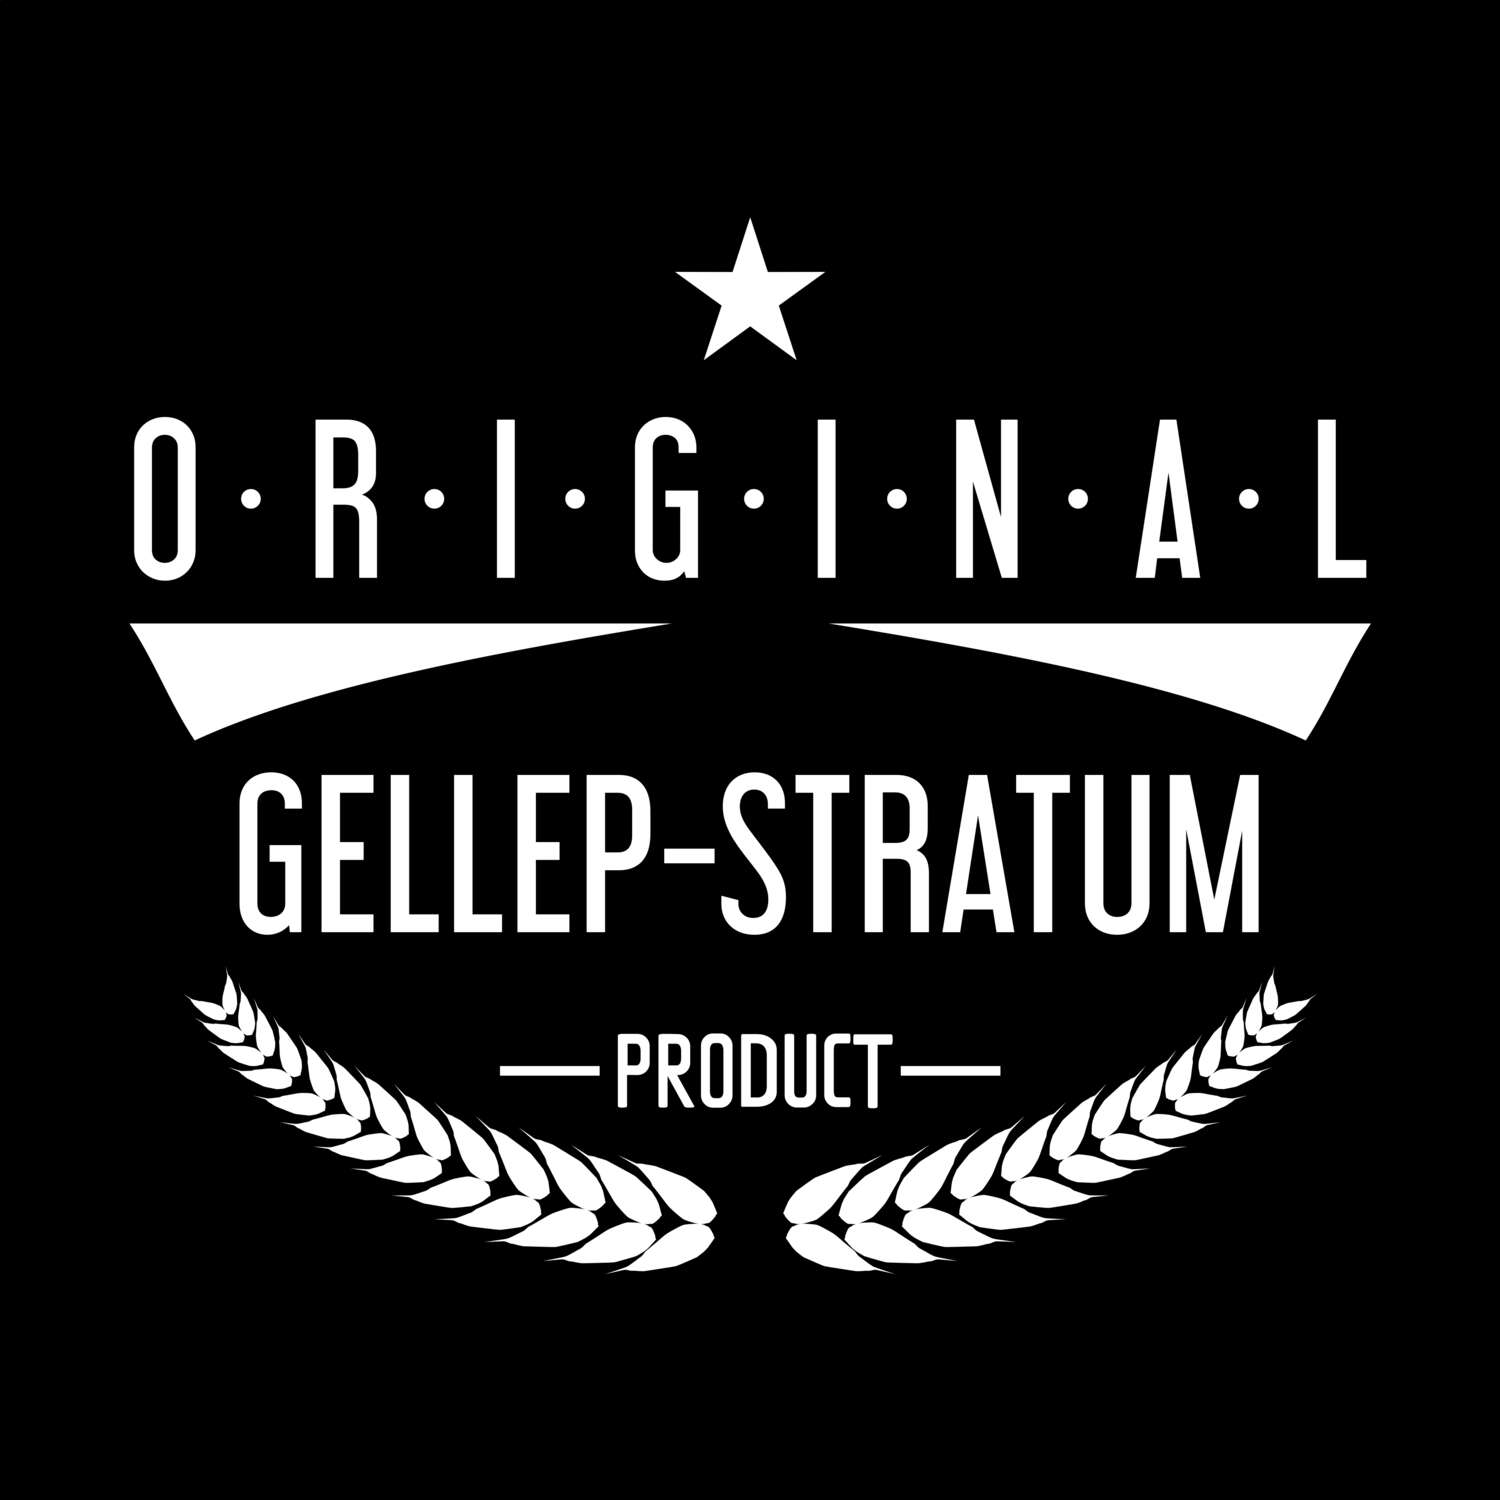 Gellep-Stratum T-Shirt »Original Product«